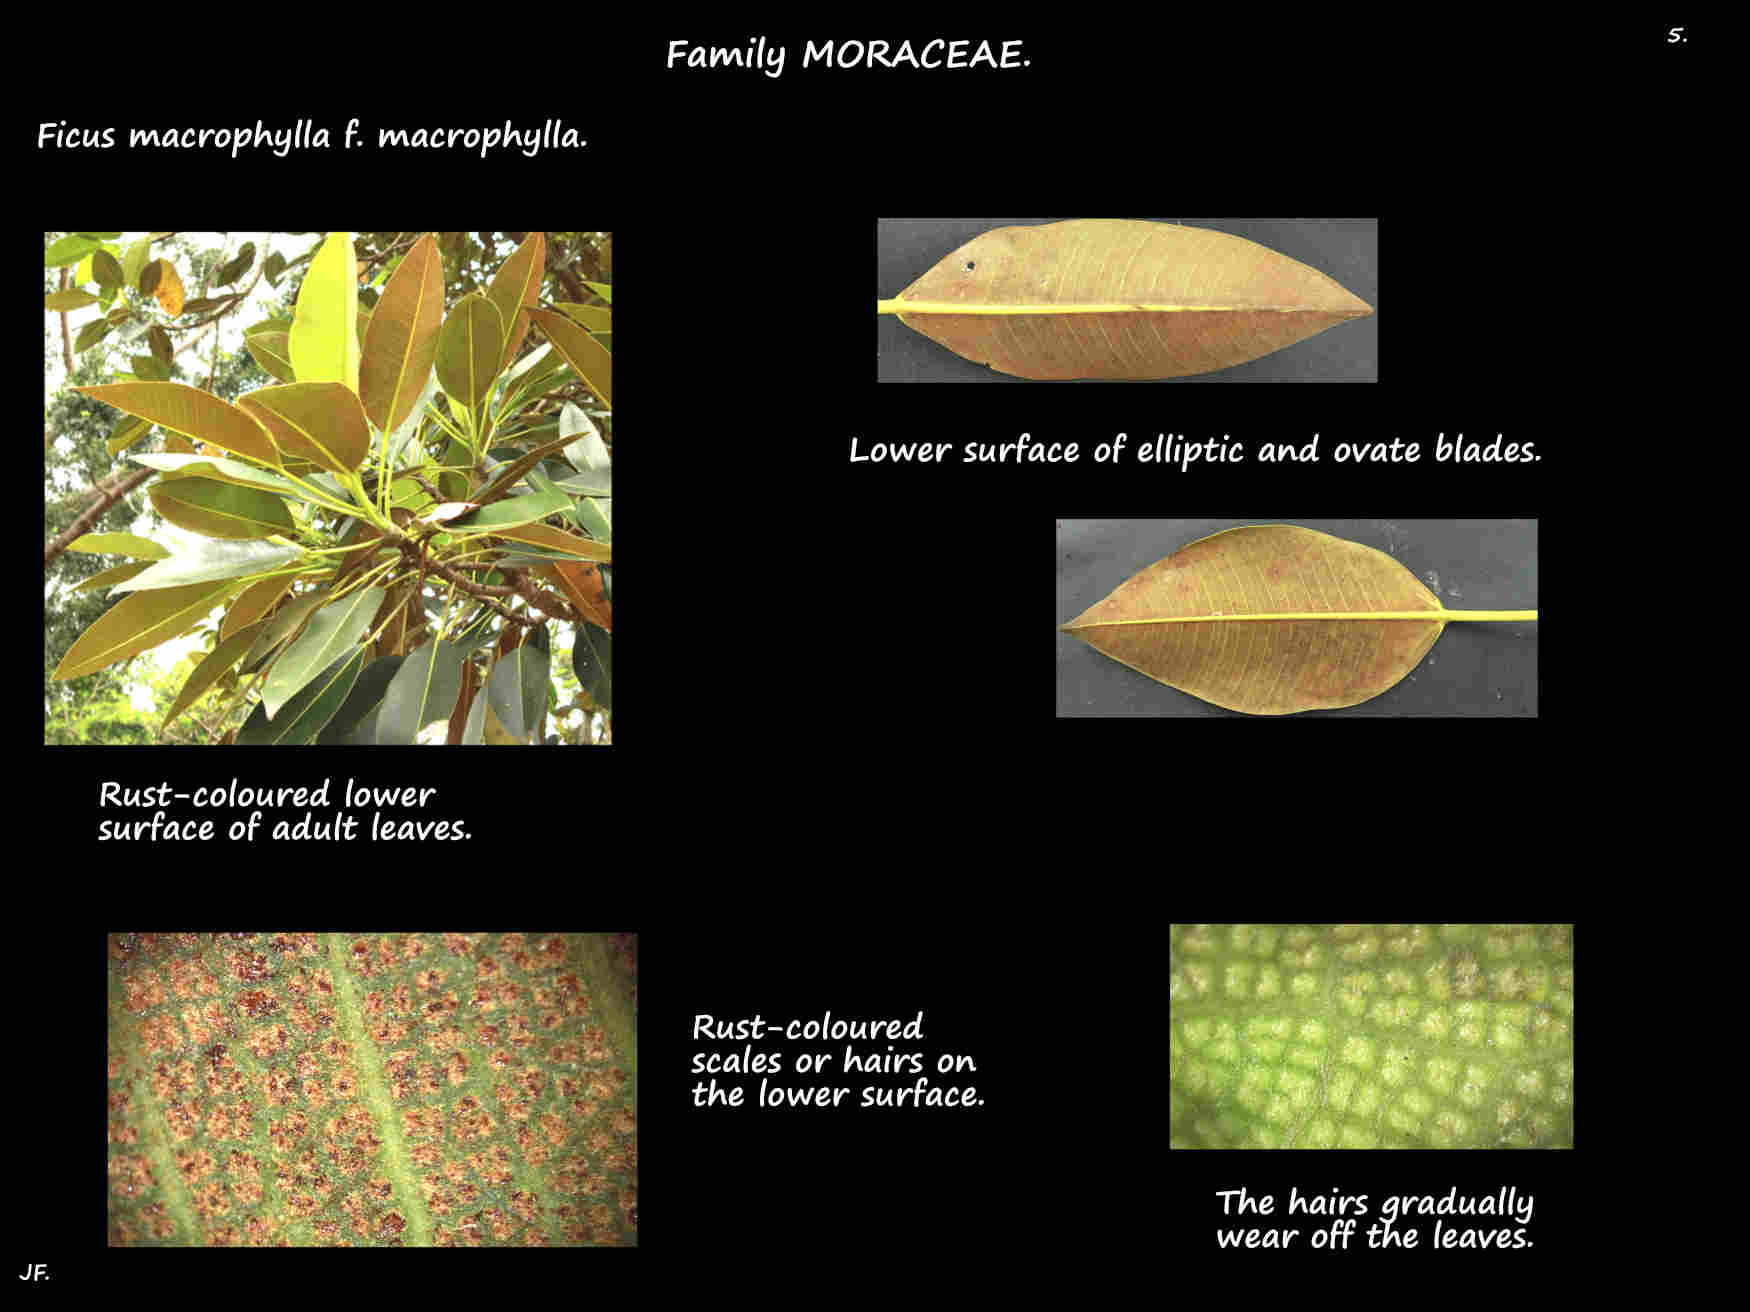 5 Hairs on Ficus macrophylla leaves